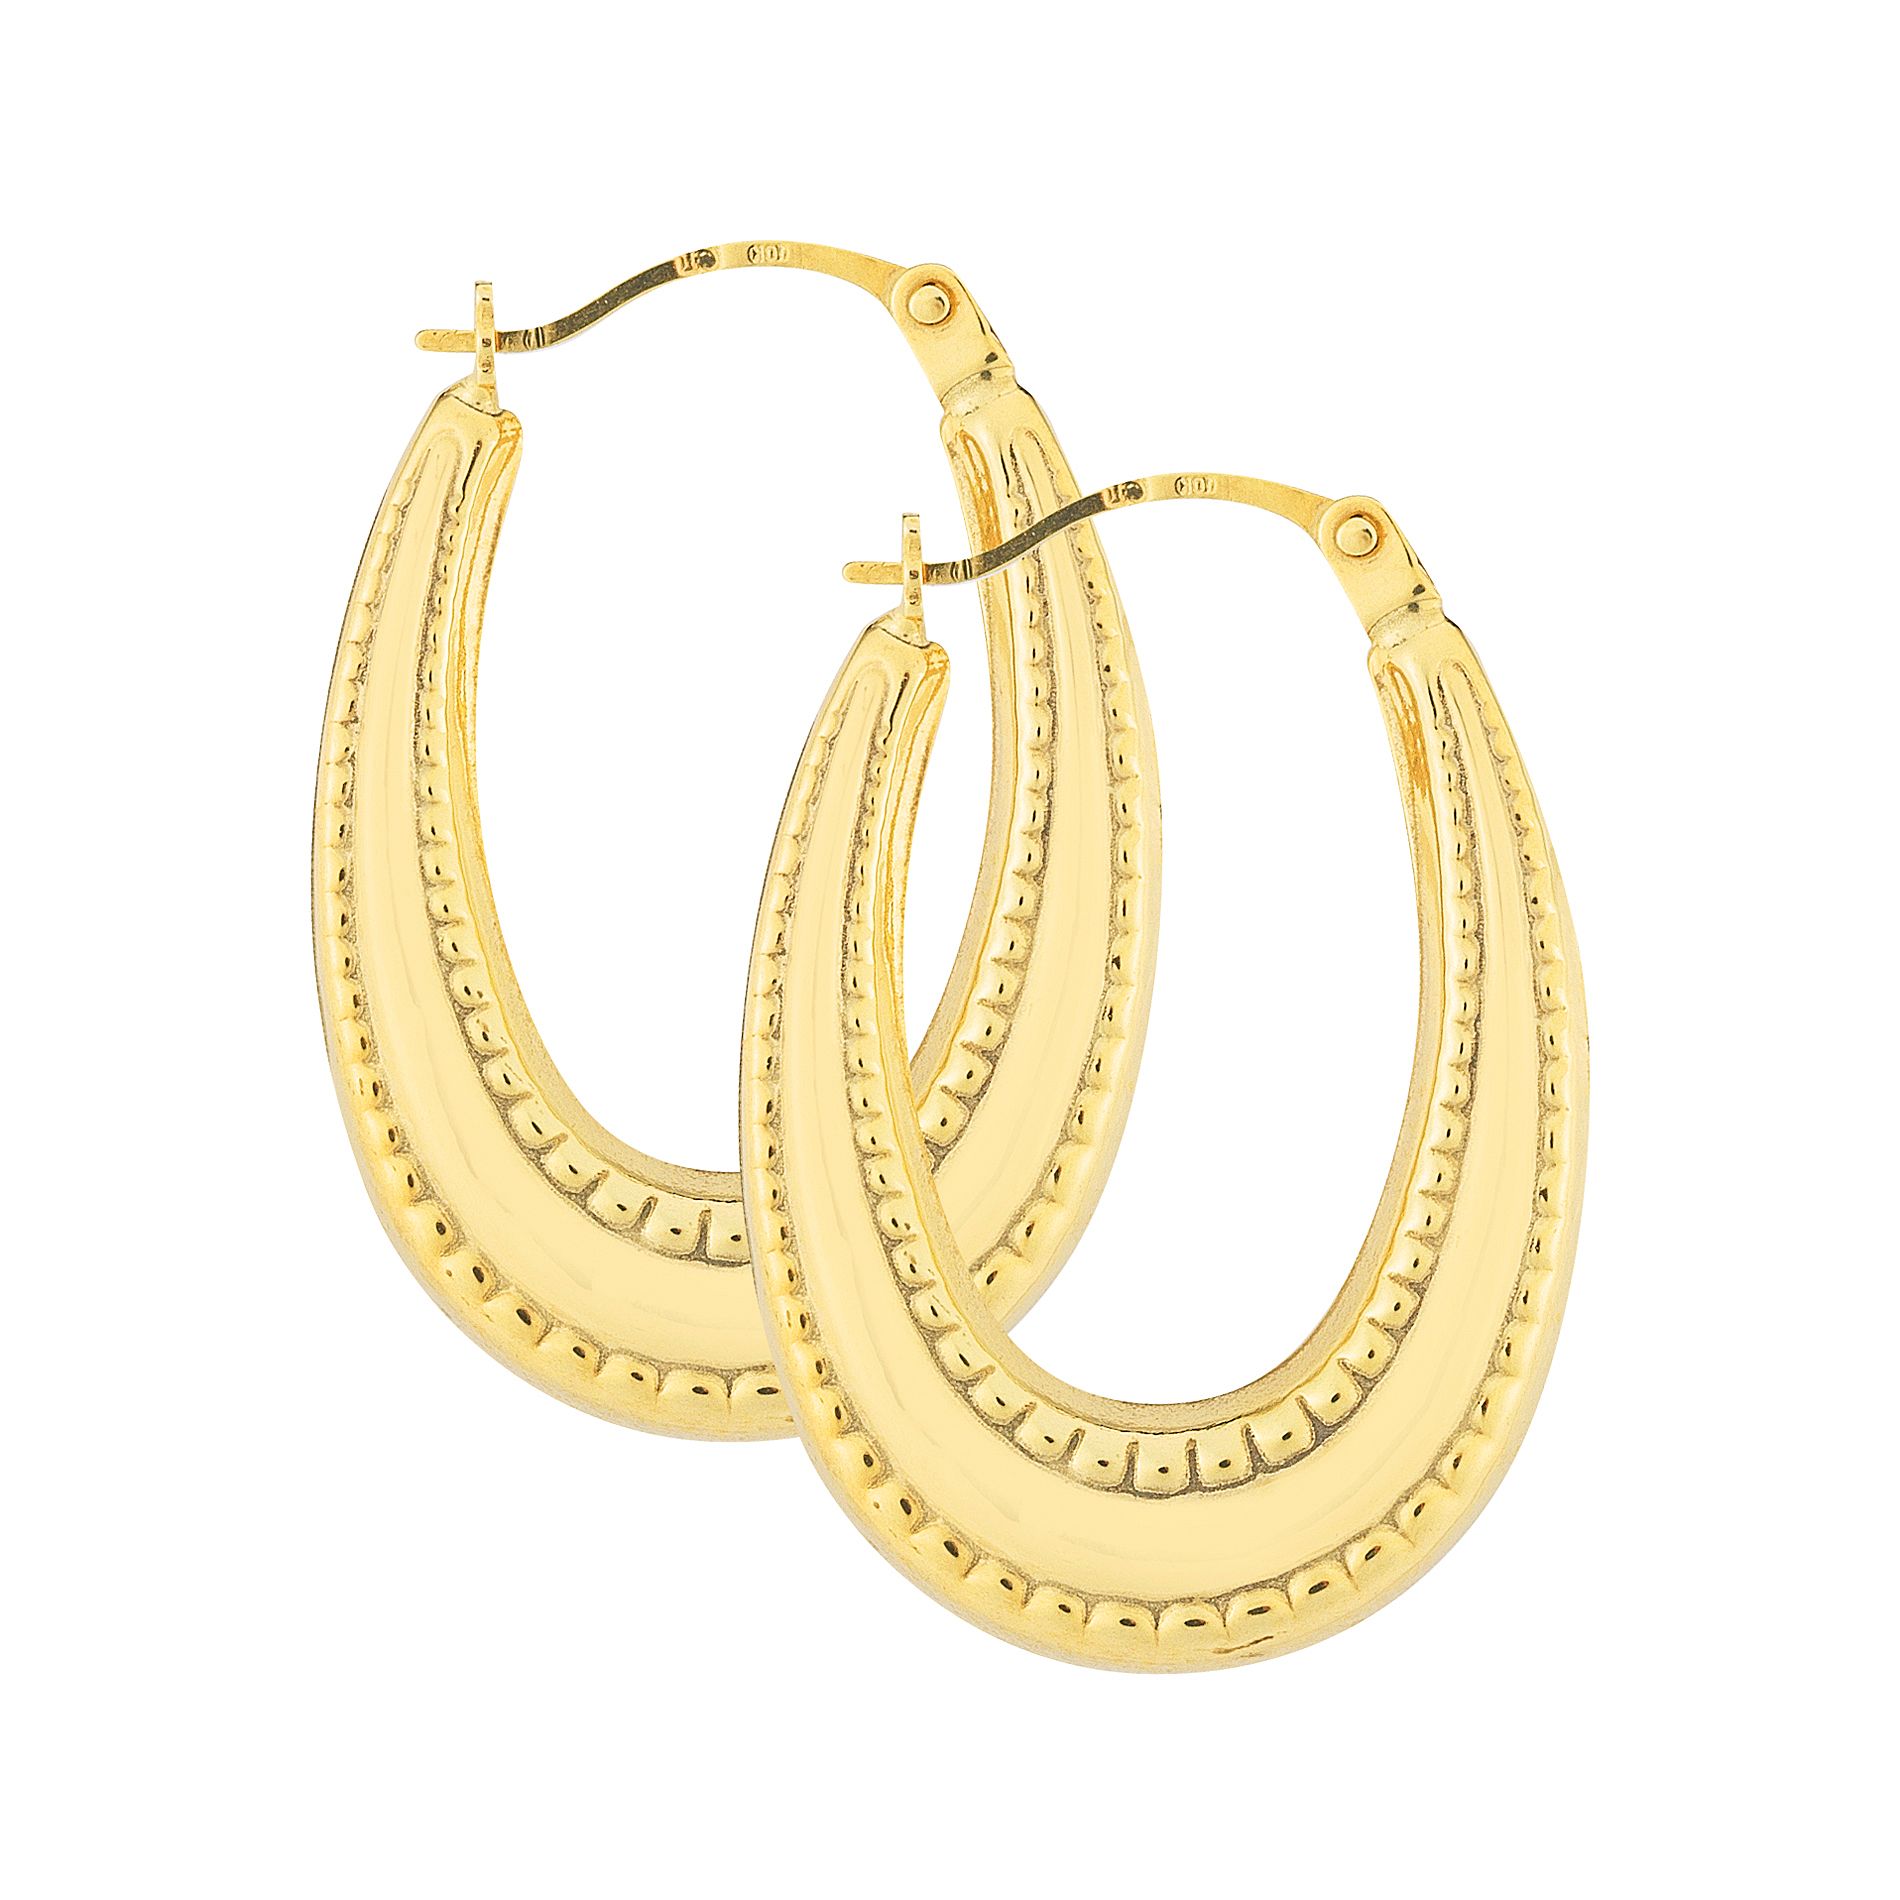 10Kt Yellow Gold Beaded Edge Polished Oval Hoop Earrings